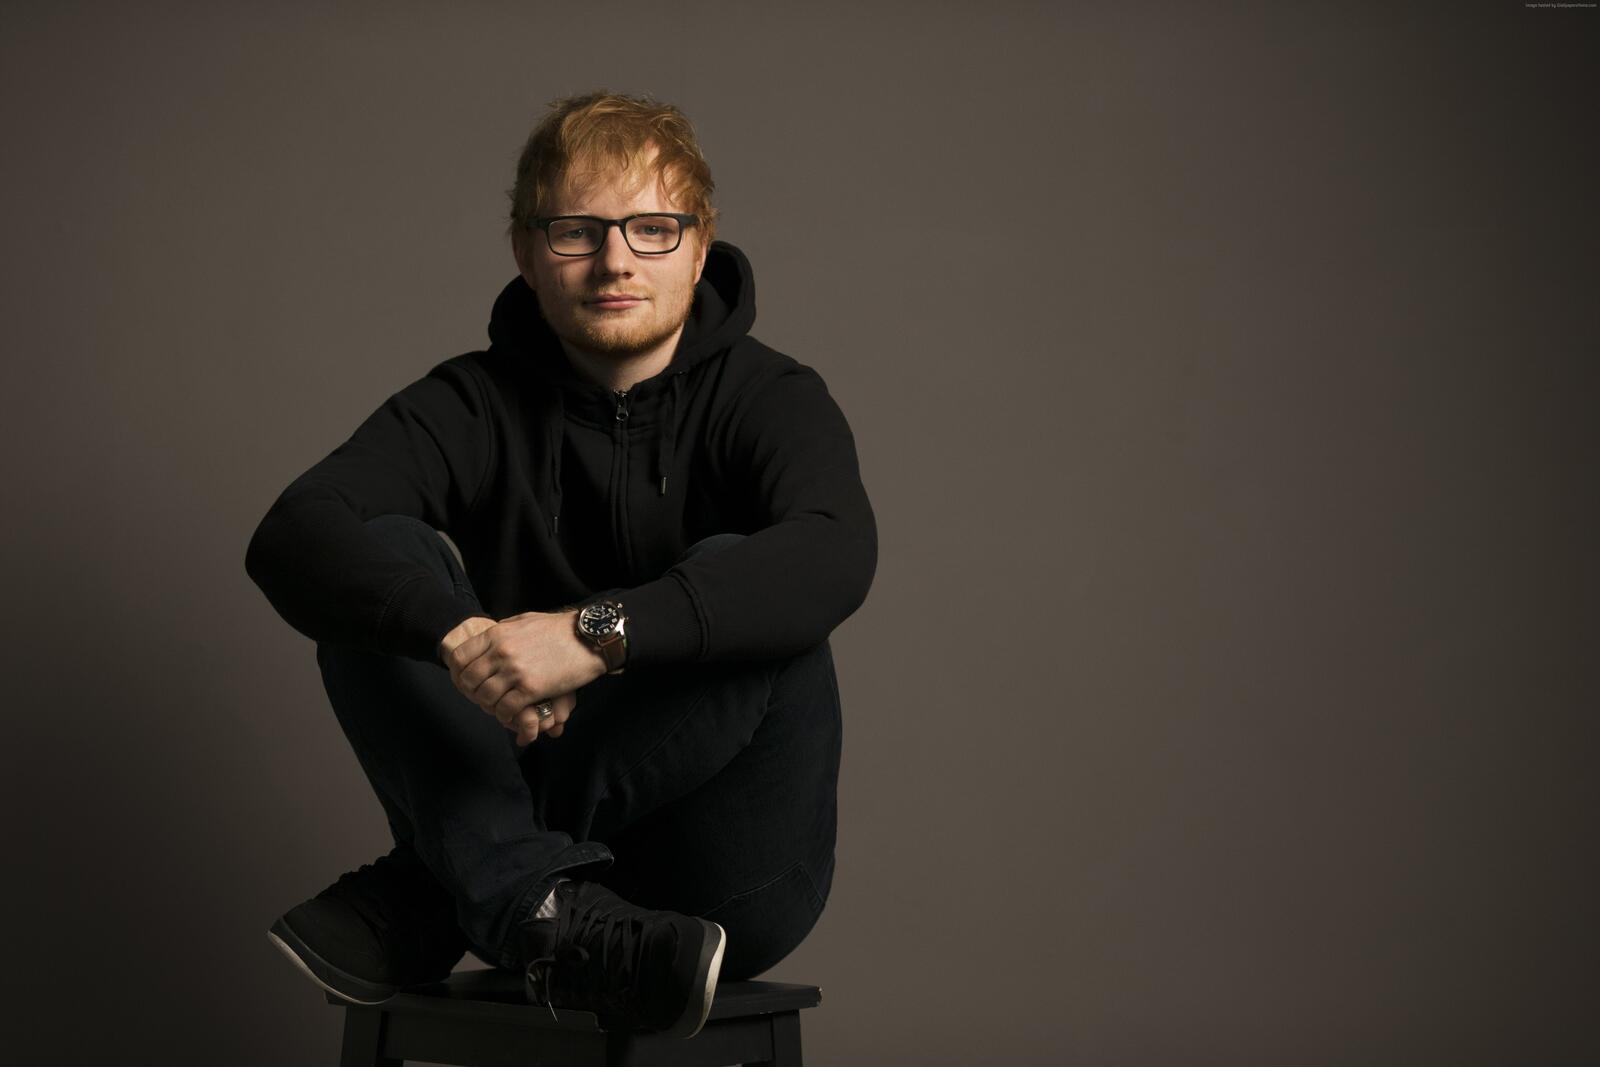 Wallpapers Ed Sheeran Music Men celebrity on the desktop